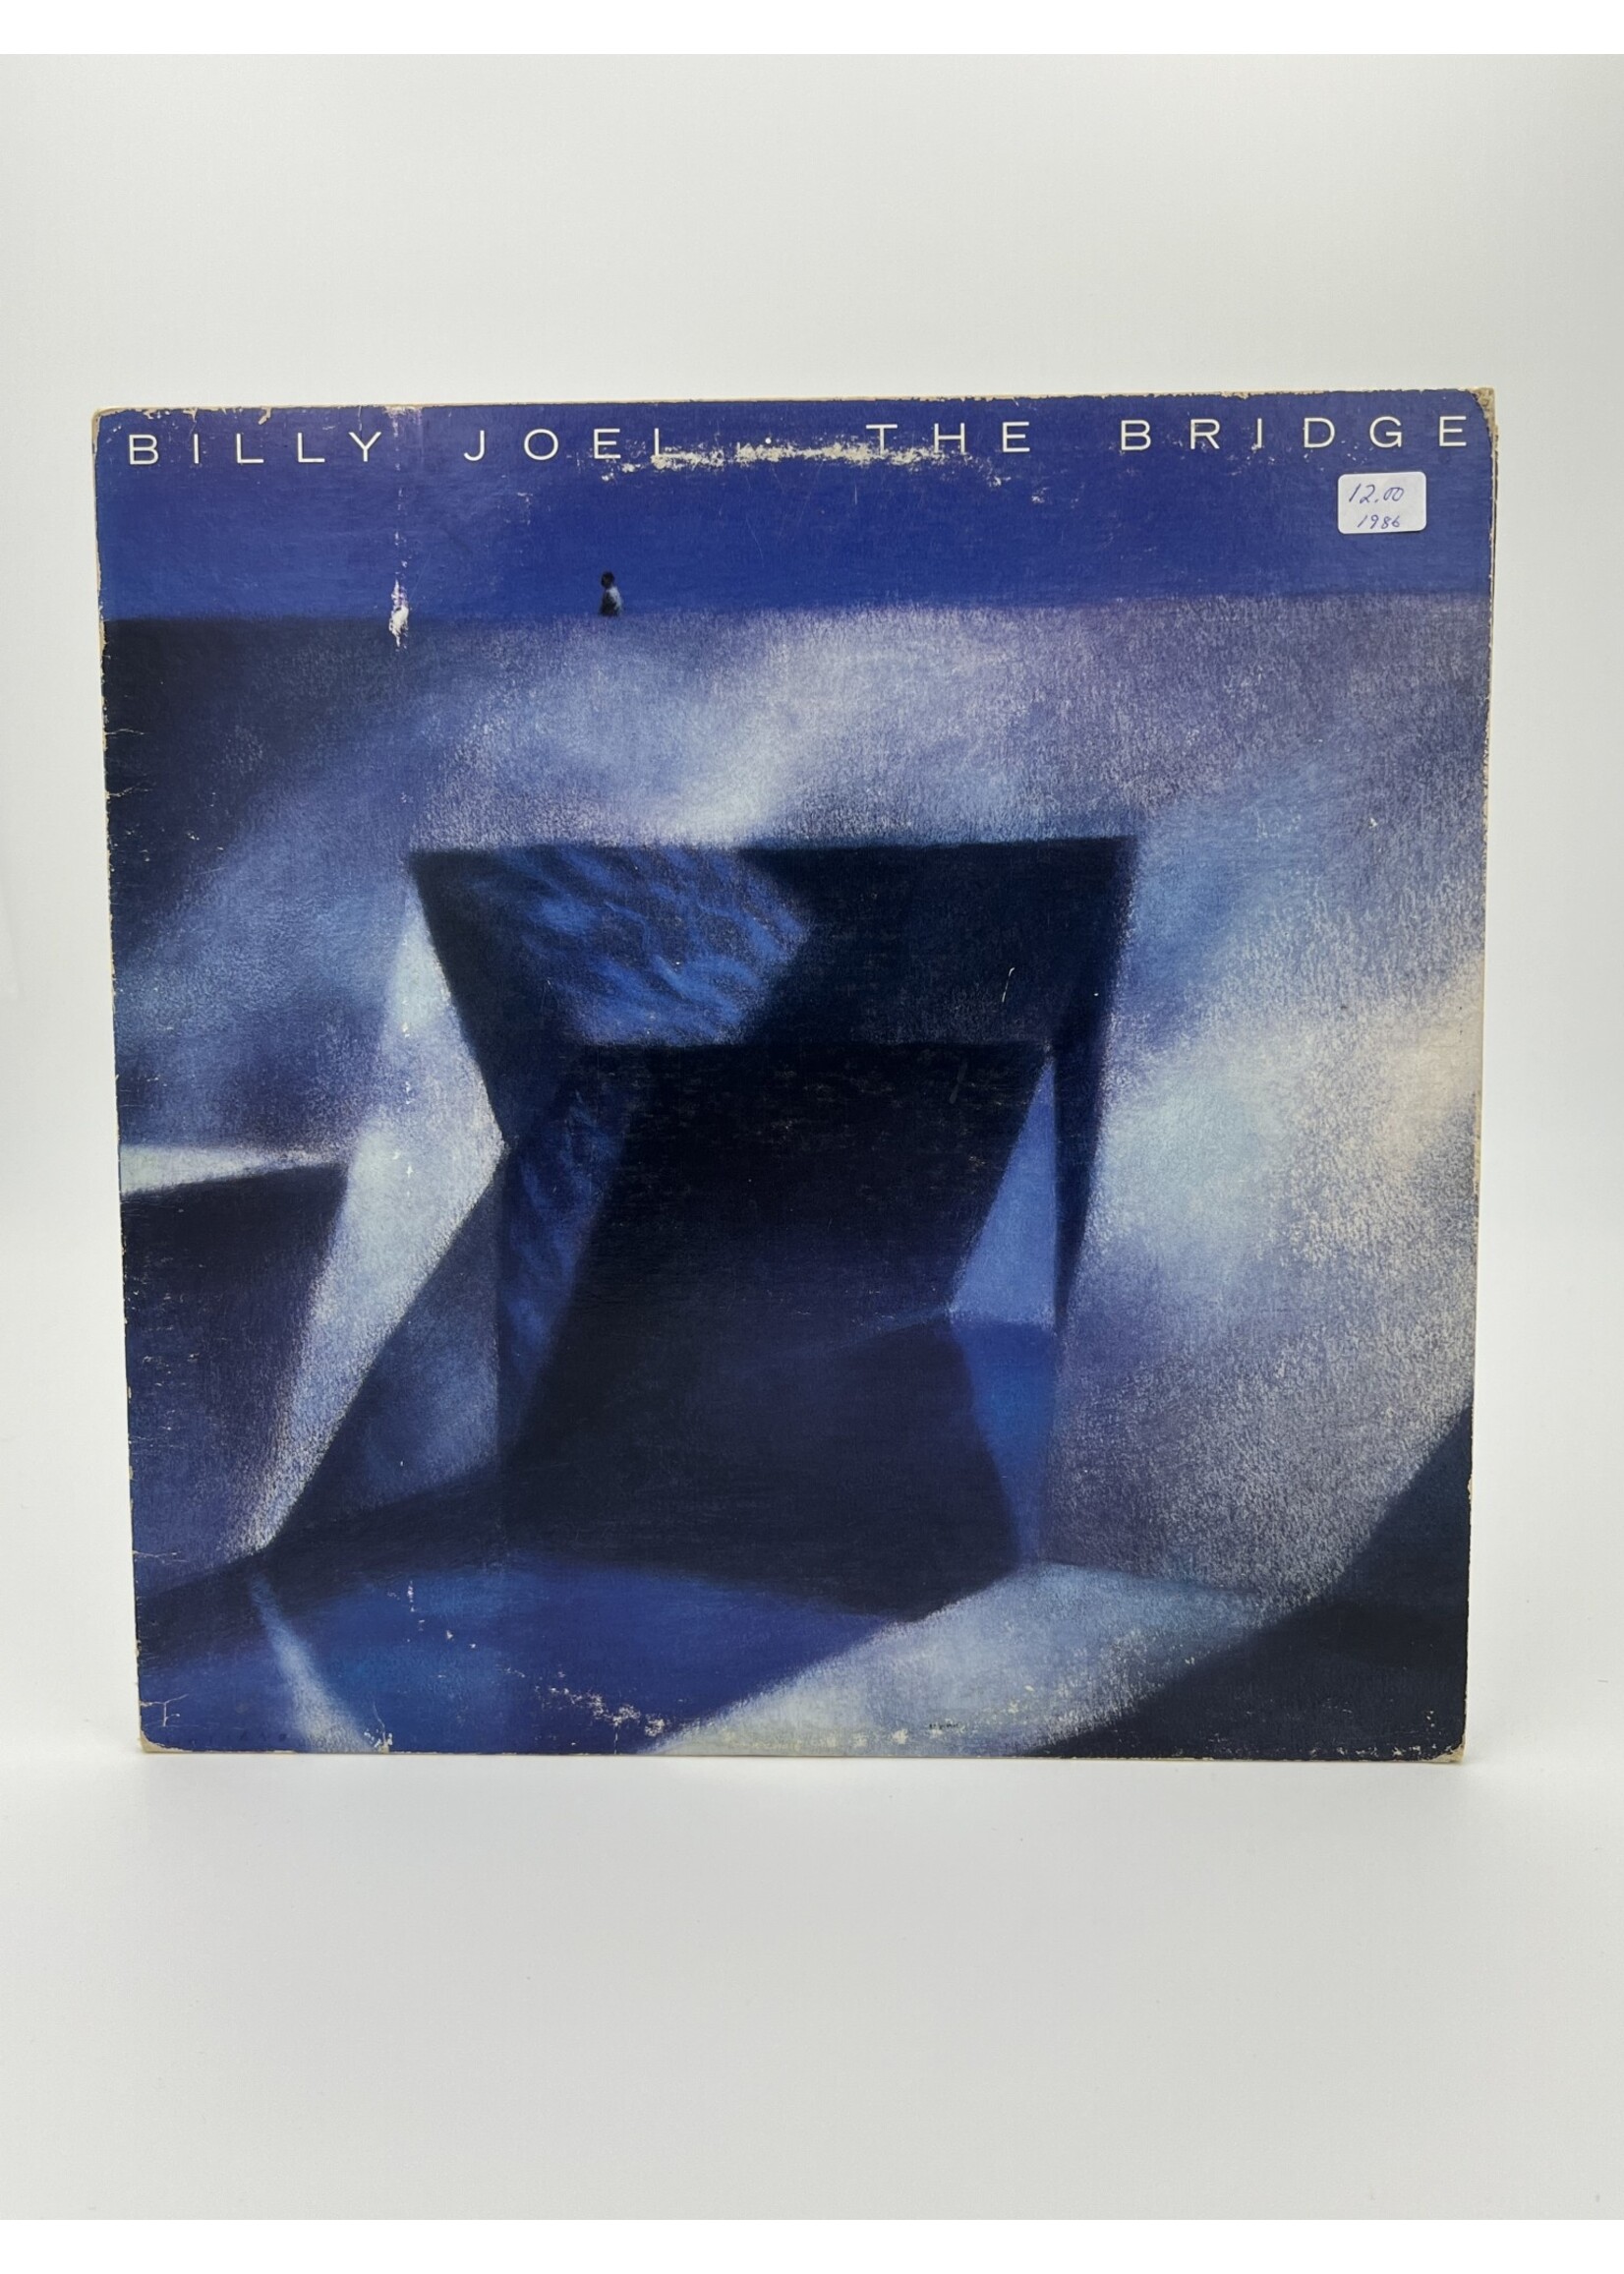 LP   Billy Joel The Bridge LP Record